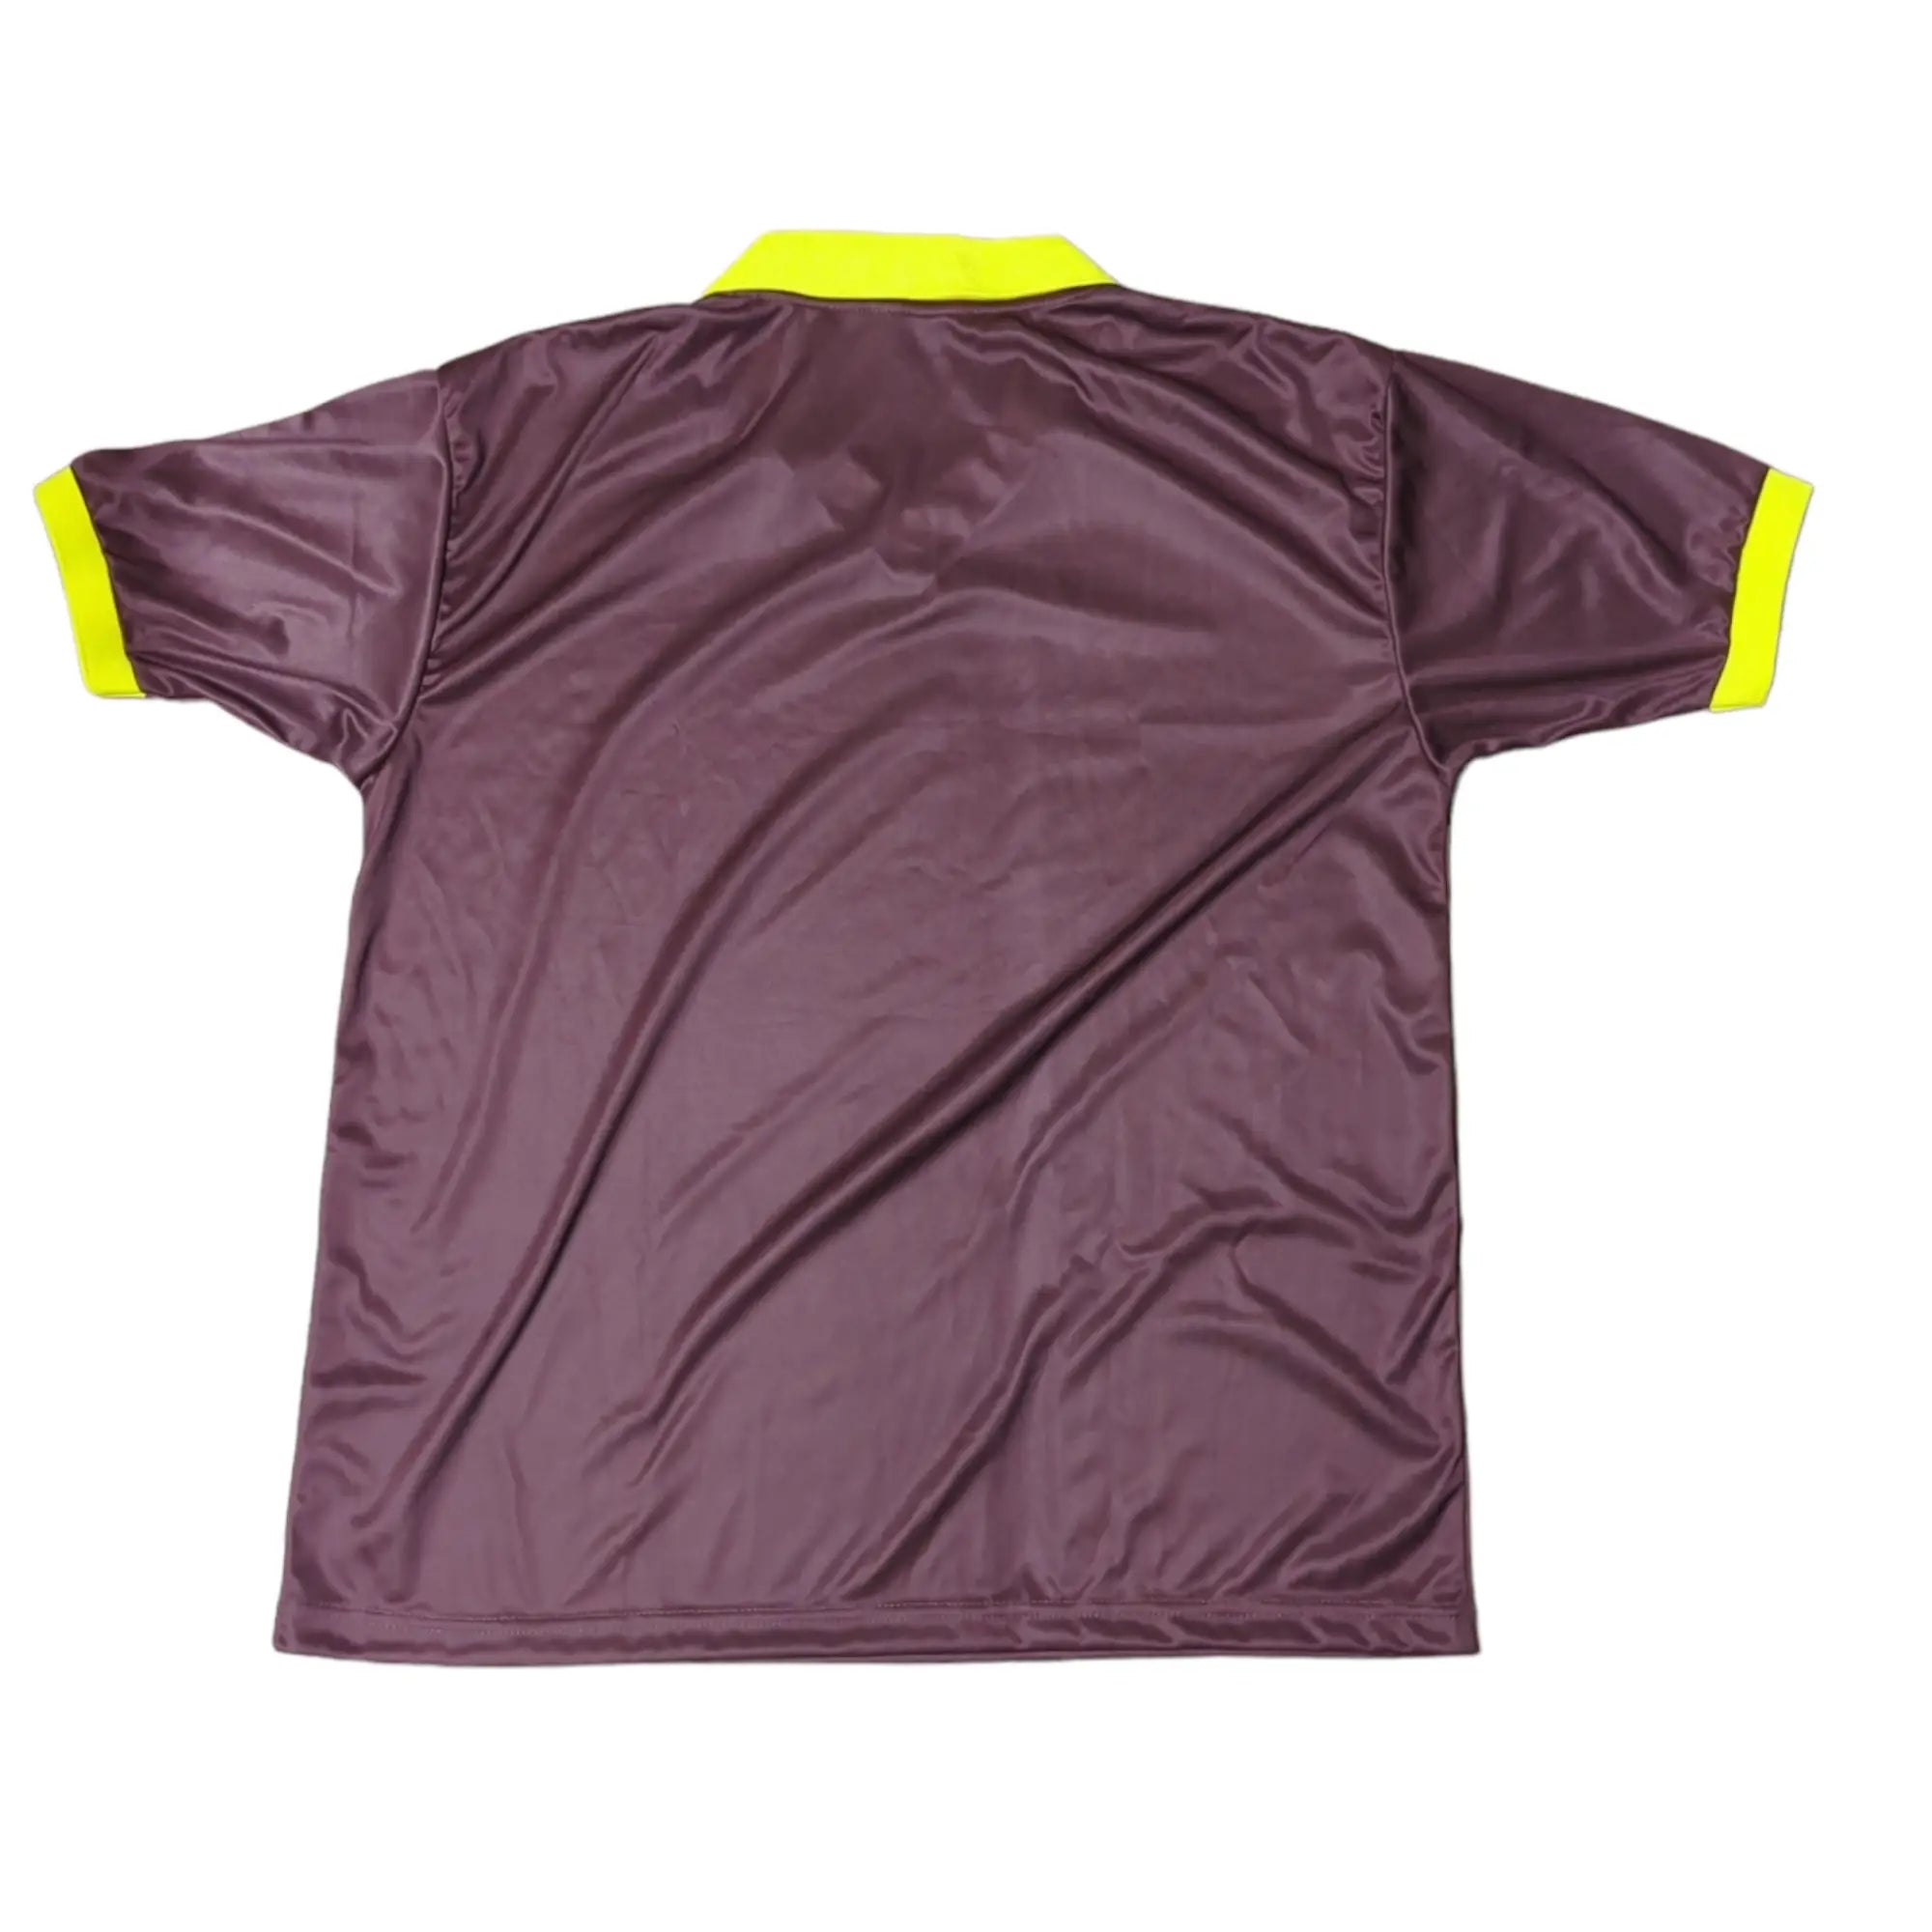 West Indies Cricket Team Maroon Shirt Replica - Team Shirt